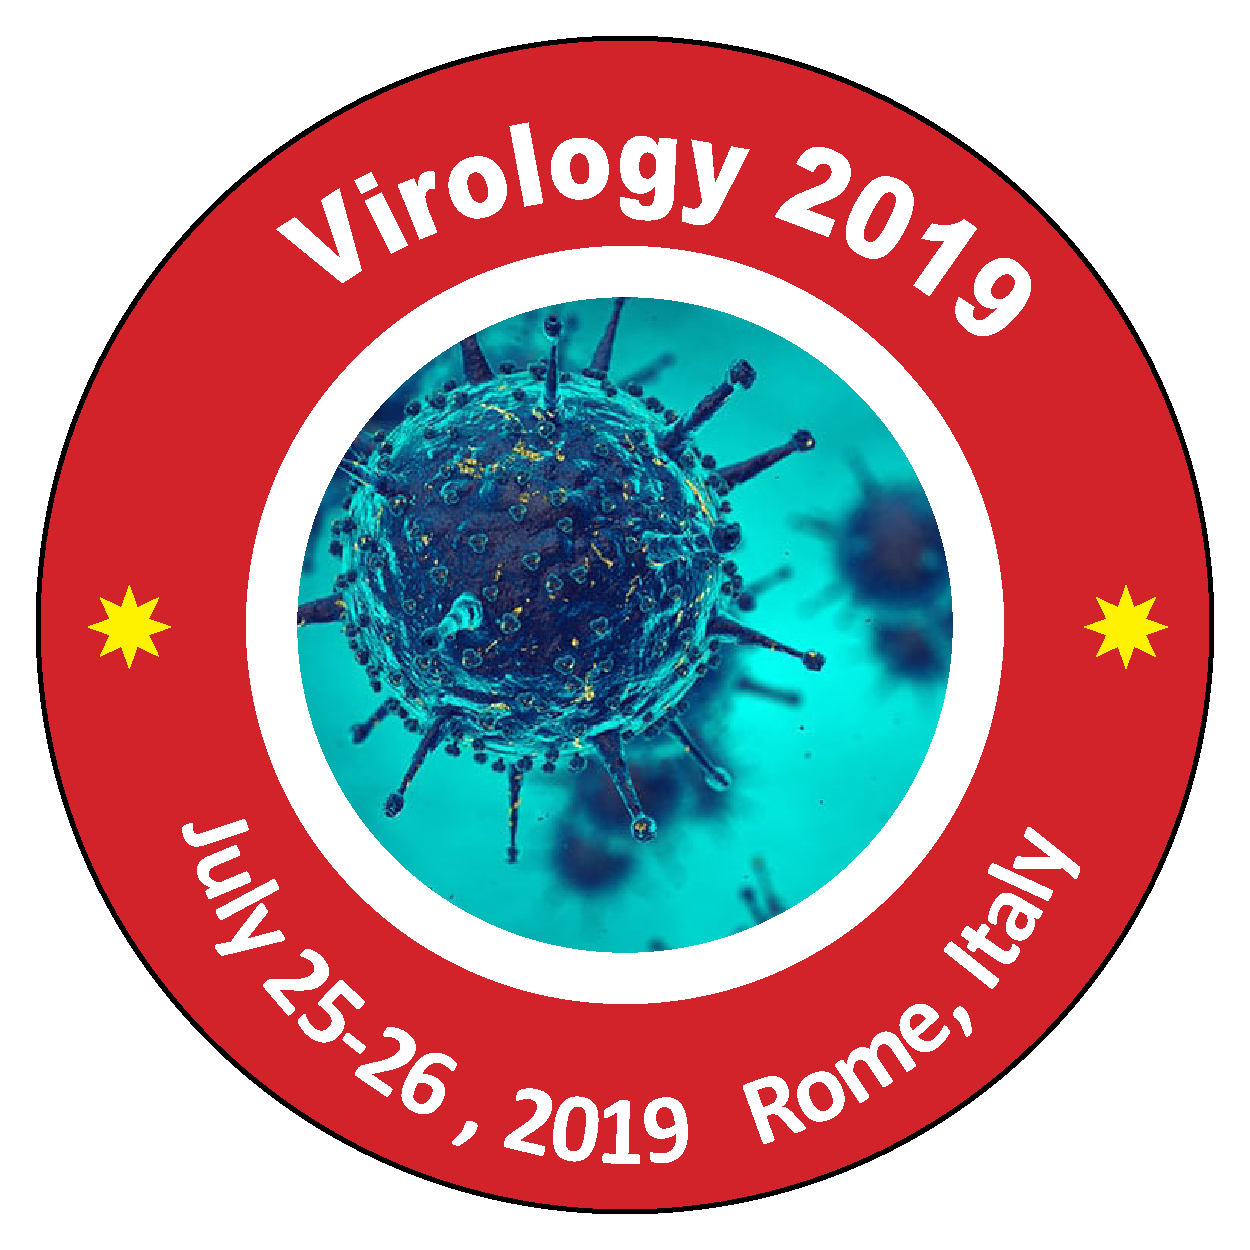 5th World Congress on Virology, Rome, Molise, Italy